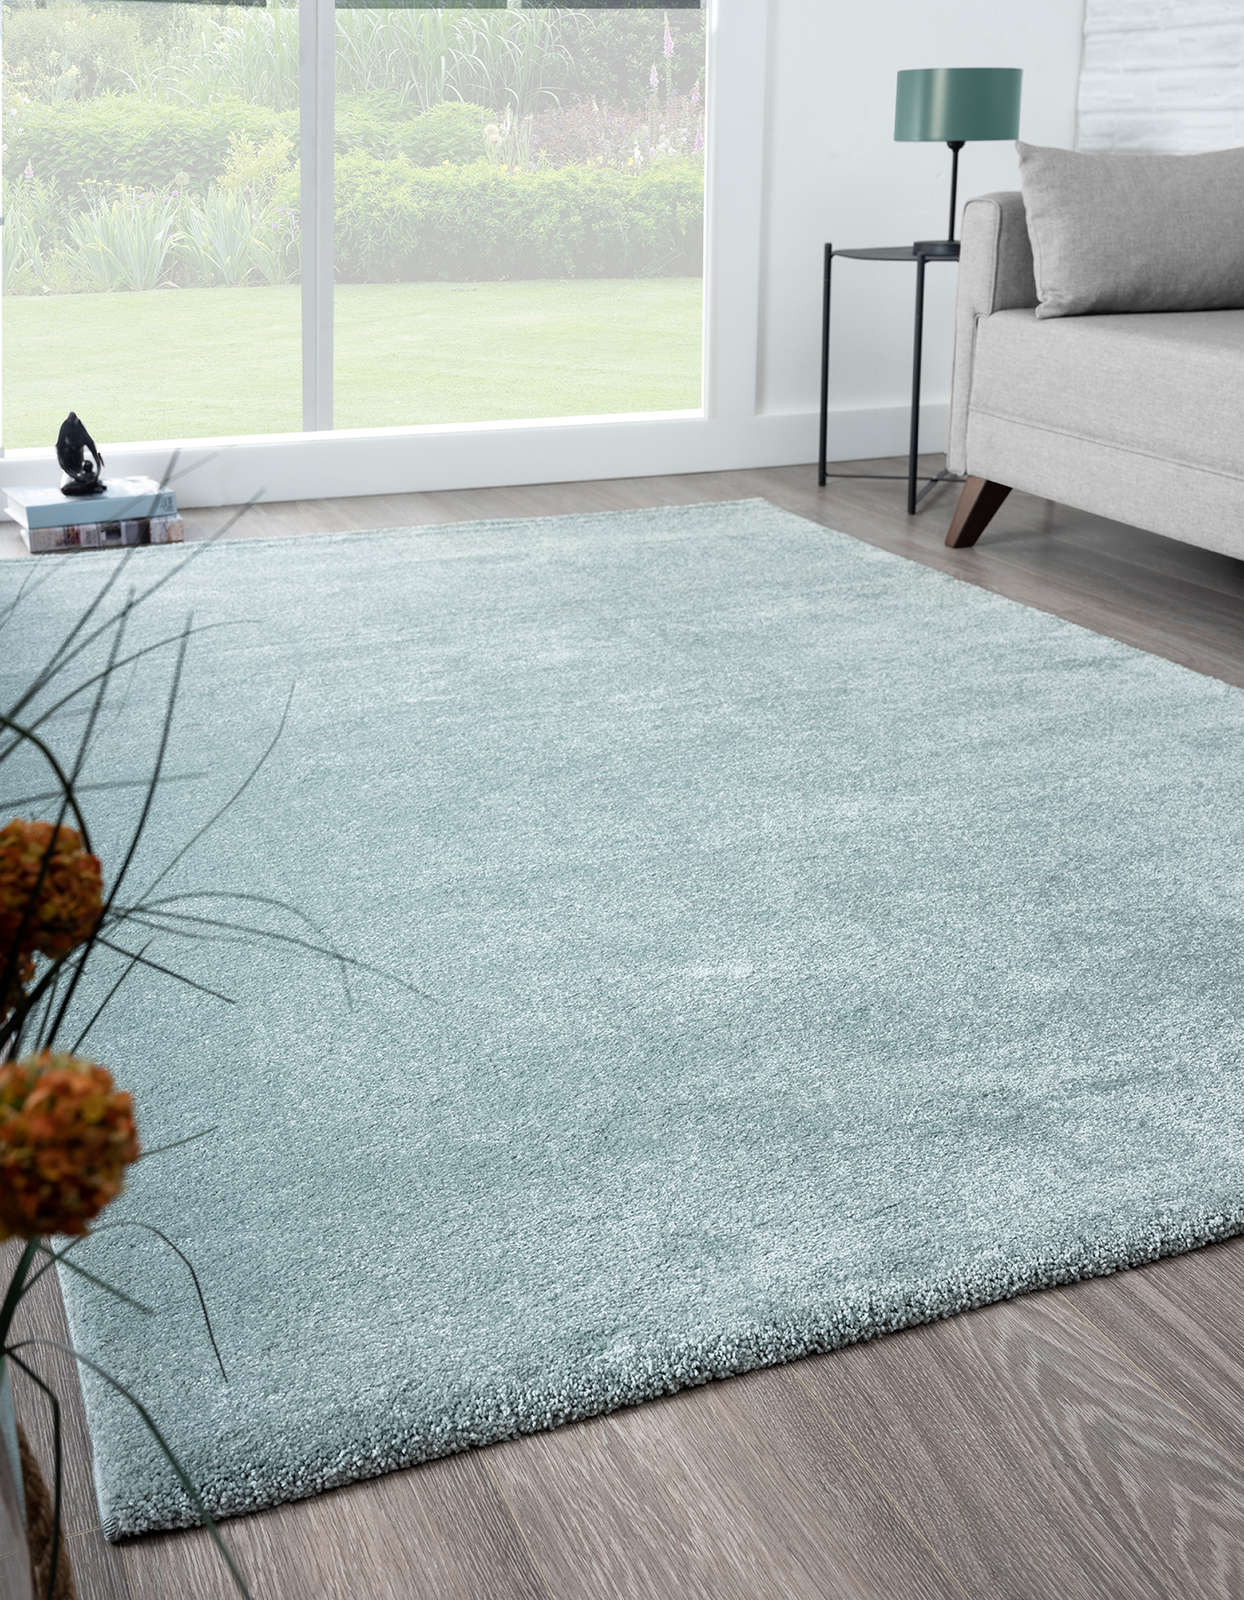             Simple short pile carpet in blue - 230 x 160 cm
        